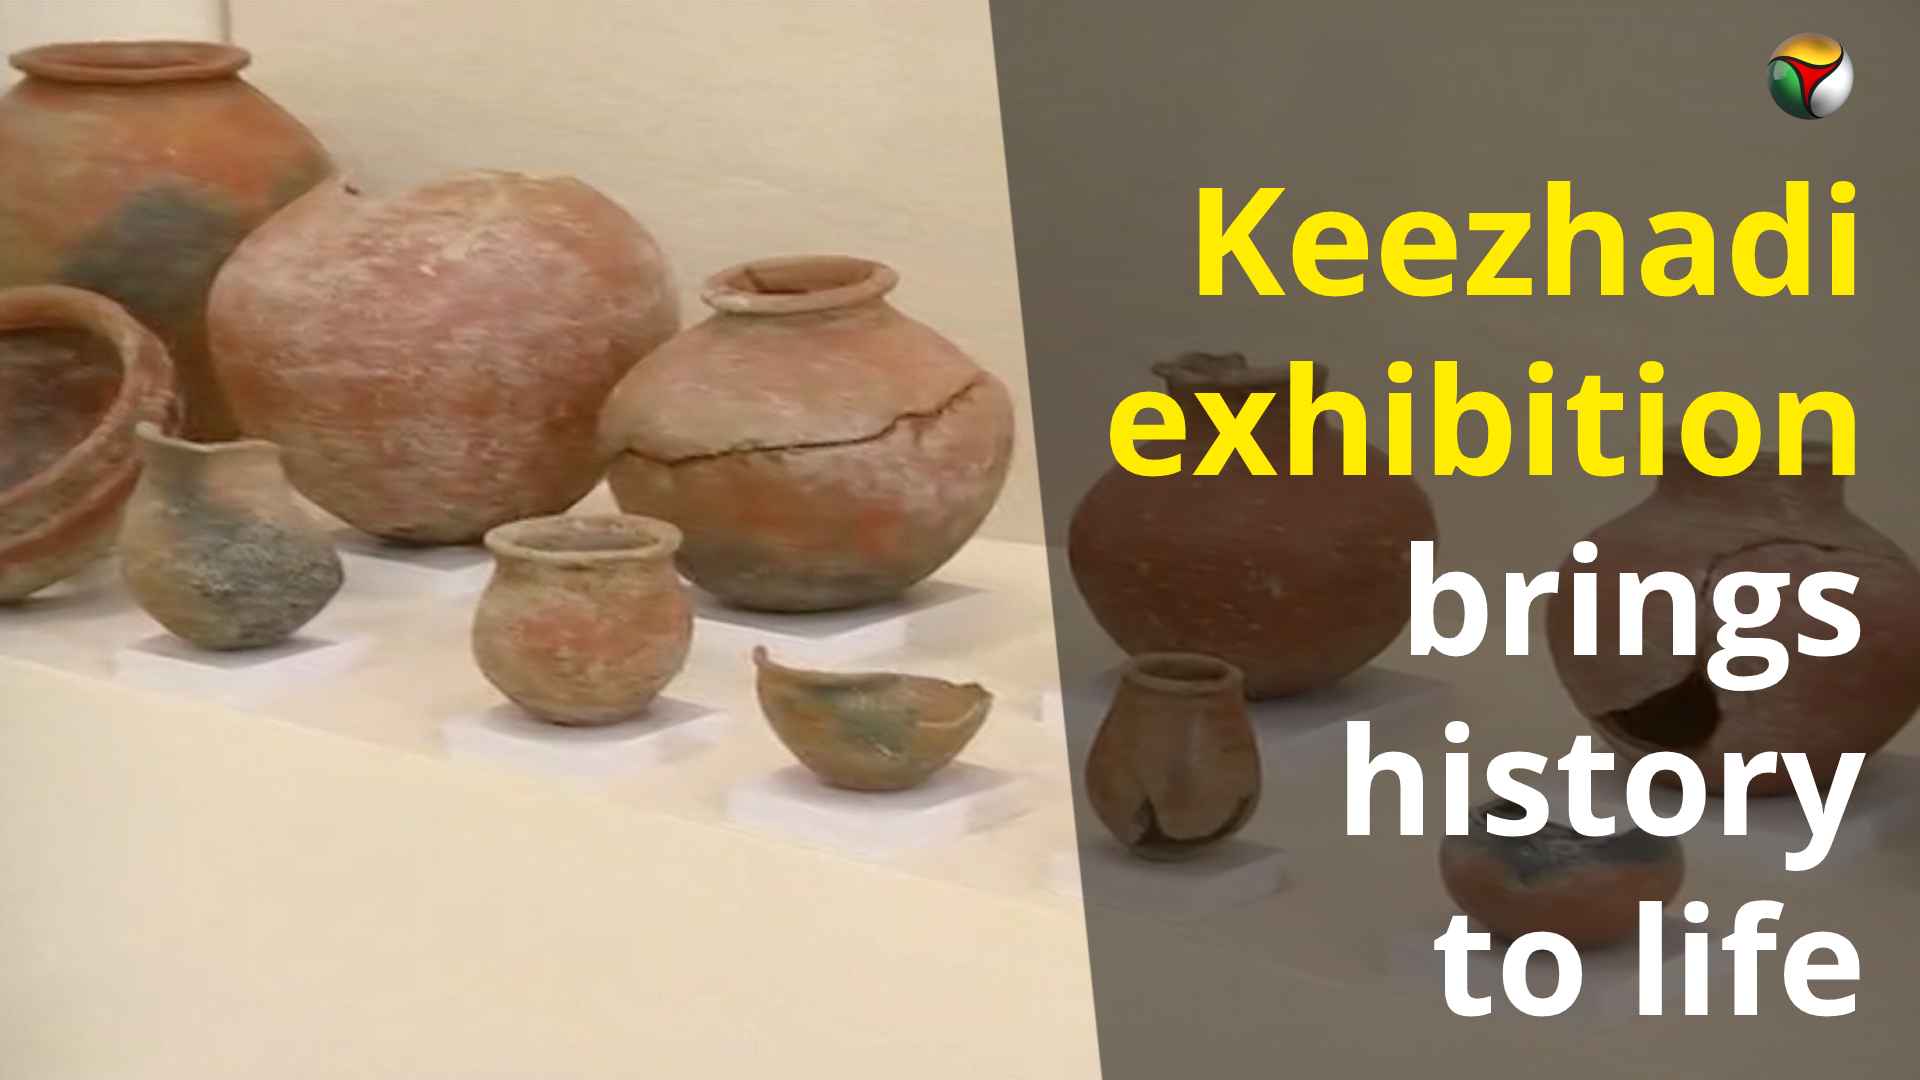 Keezhadi exhibition brings history to life